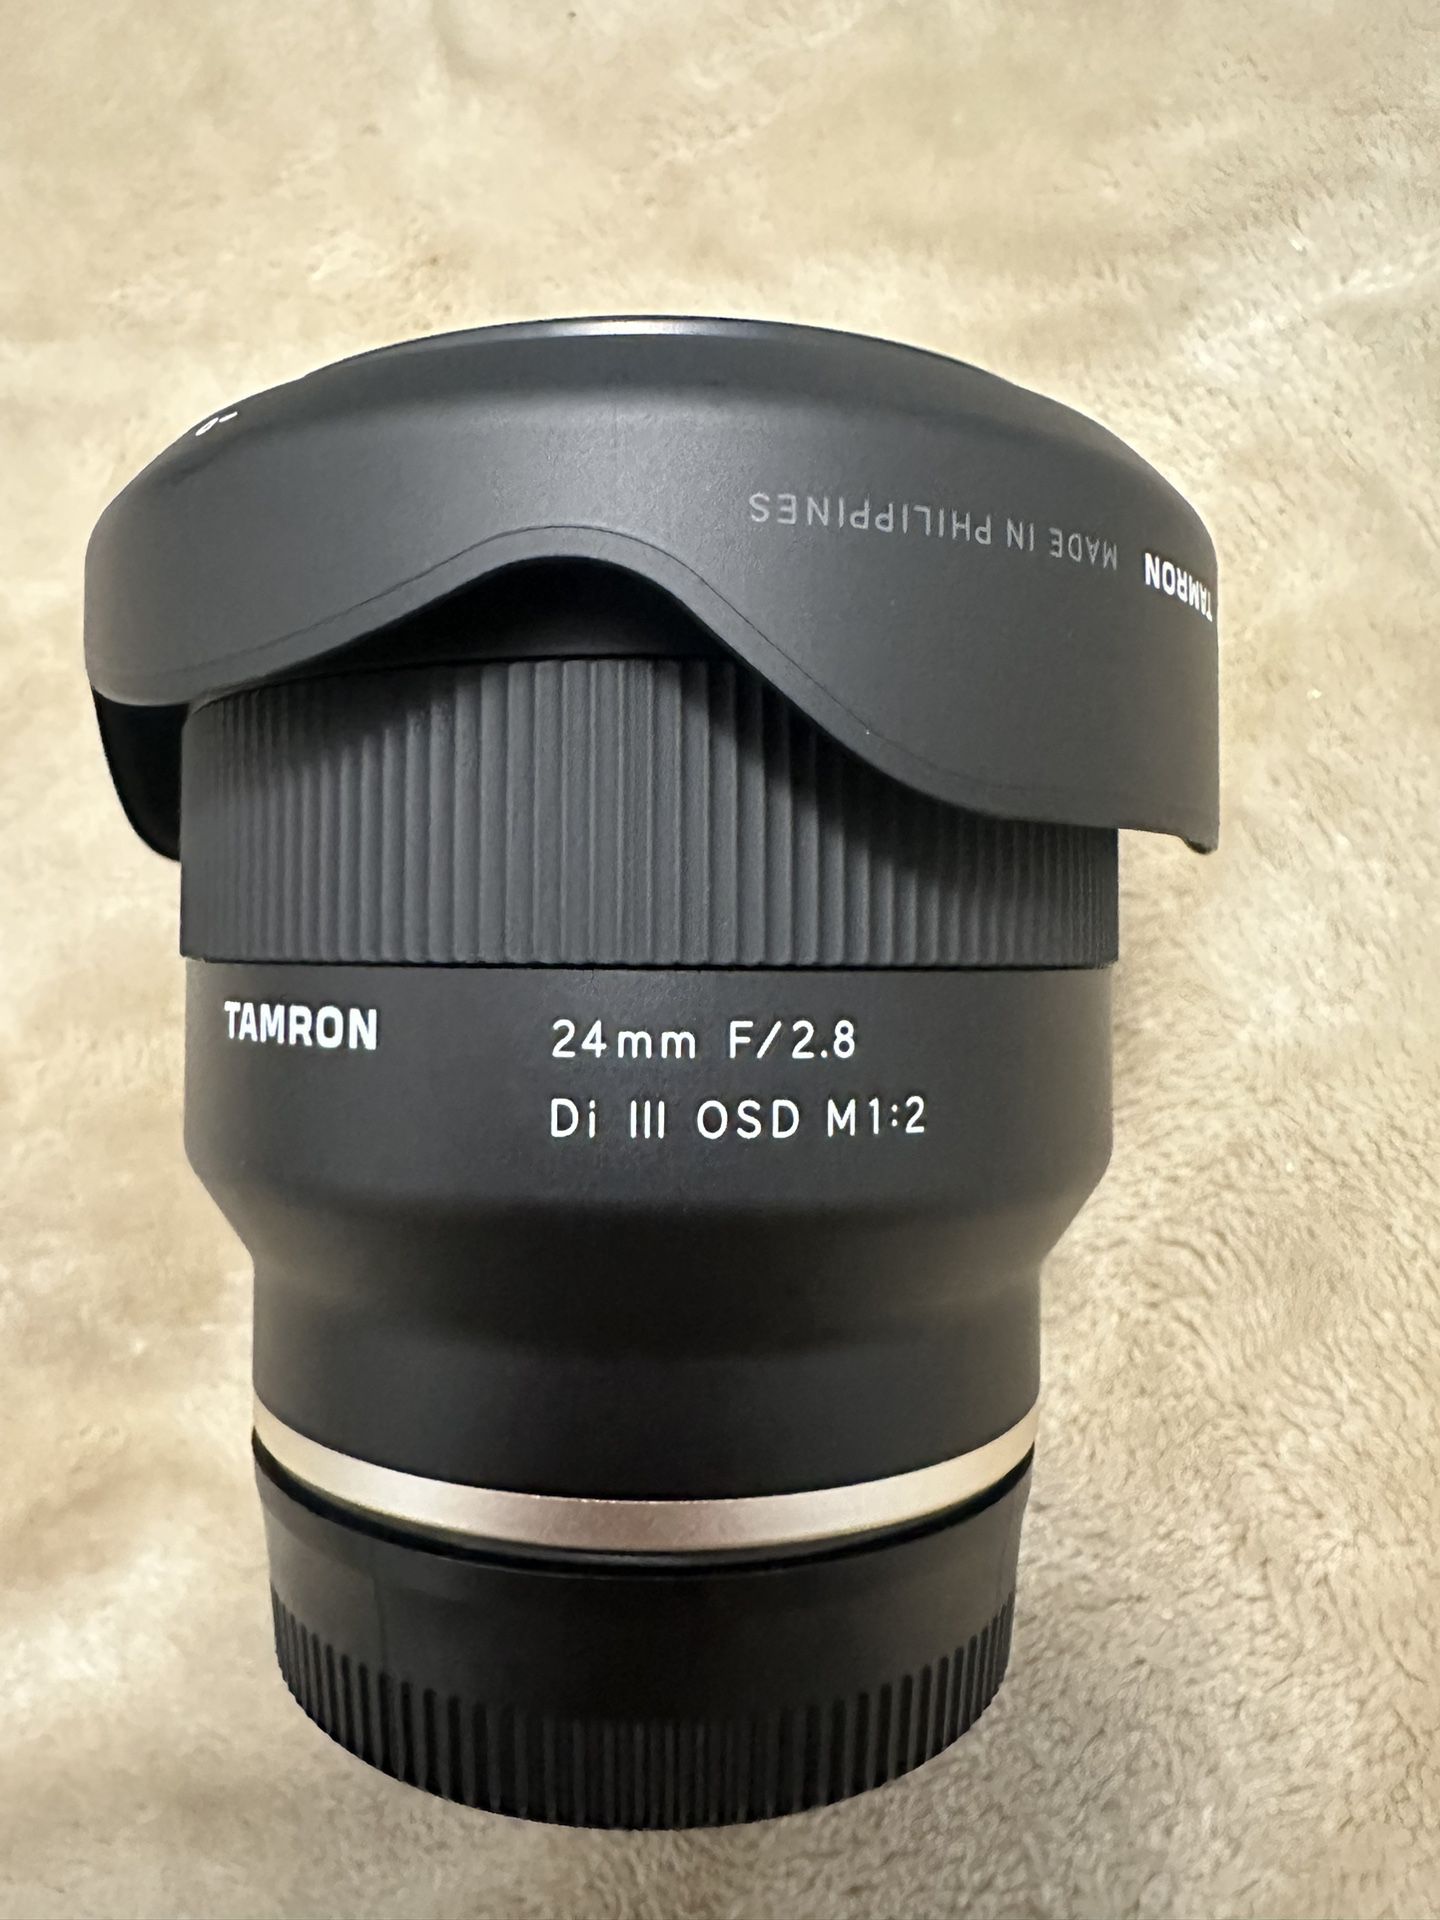 Tamron 24mm f/2.8 Di III OSD M1:2 Lens for Sony E